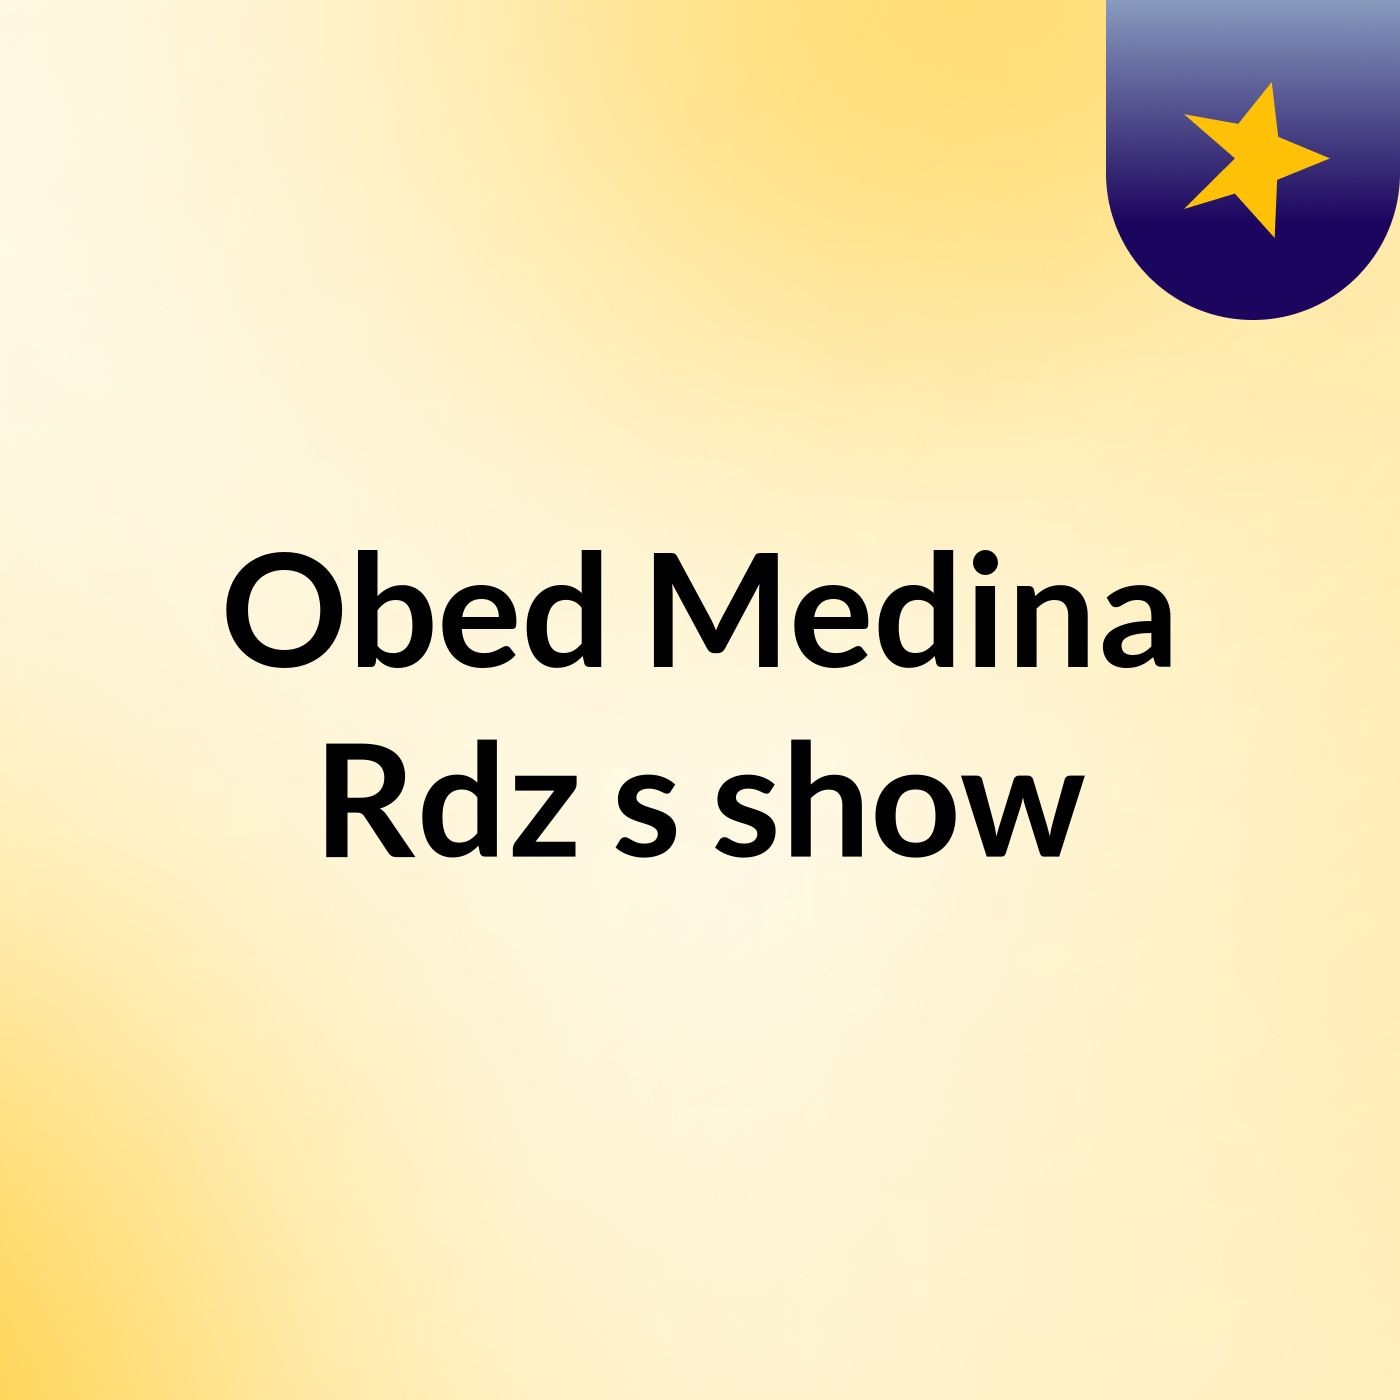 Obed Medina Rdz's show